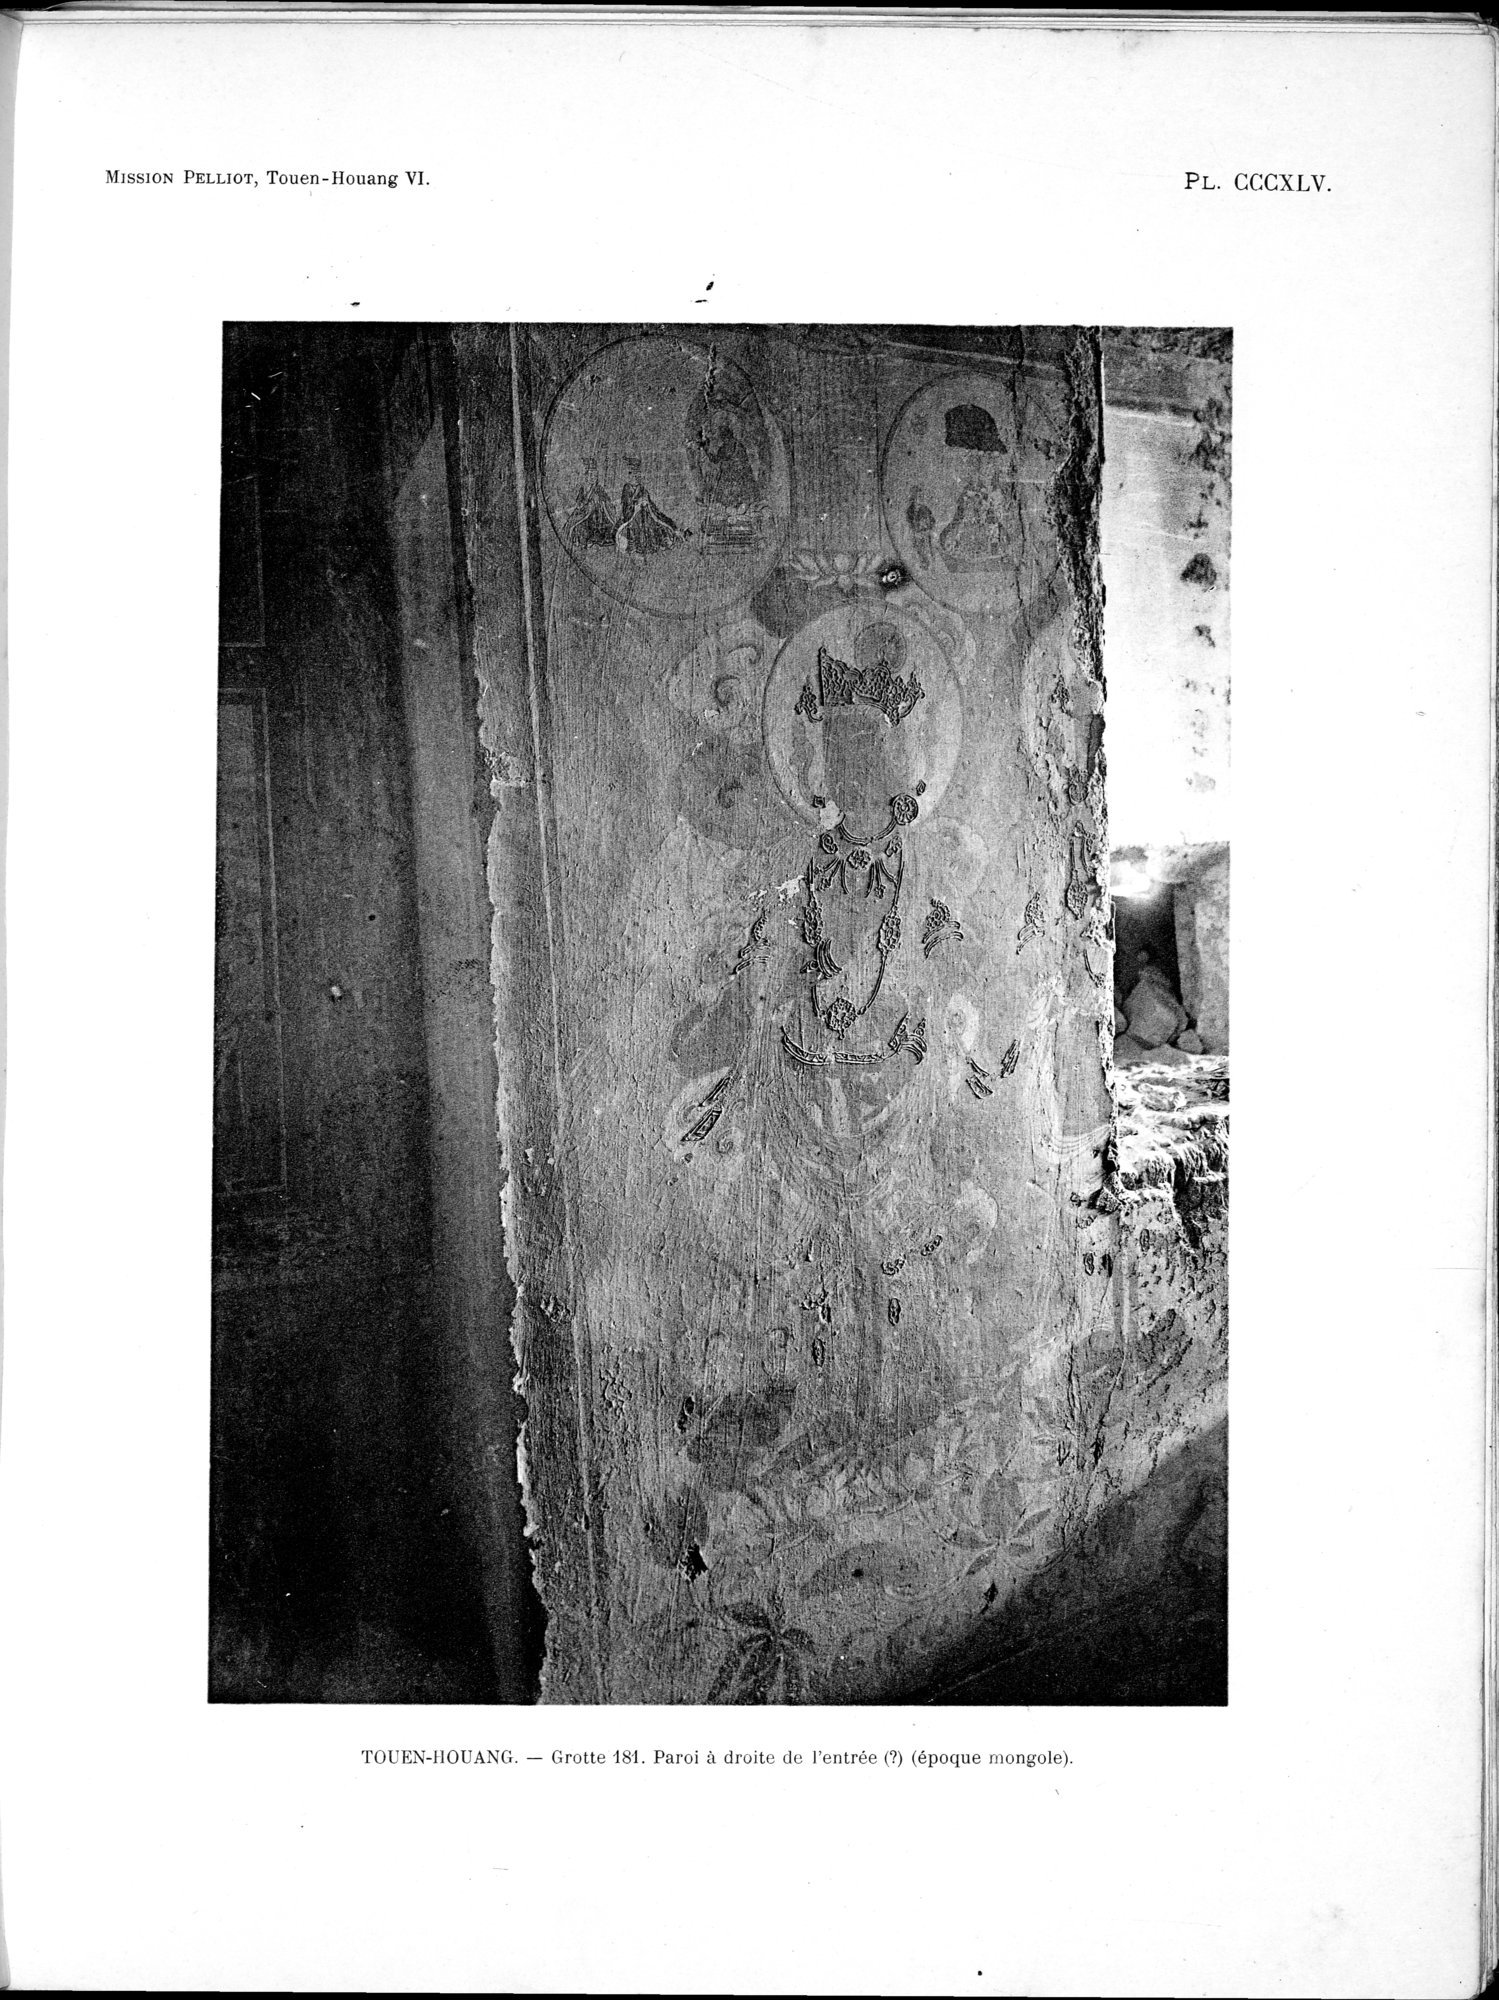 Les grottes de Touen-Houang : vol.6 / Page 57 (Grayscale High Resolution Image)